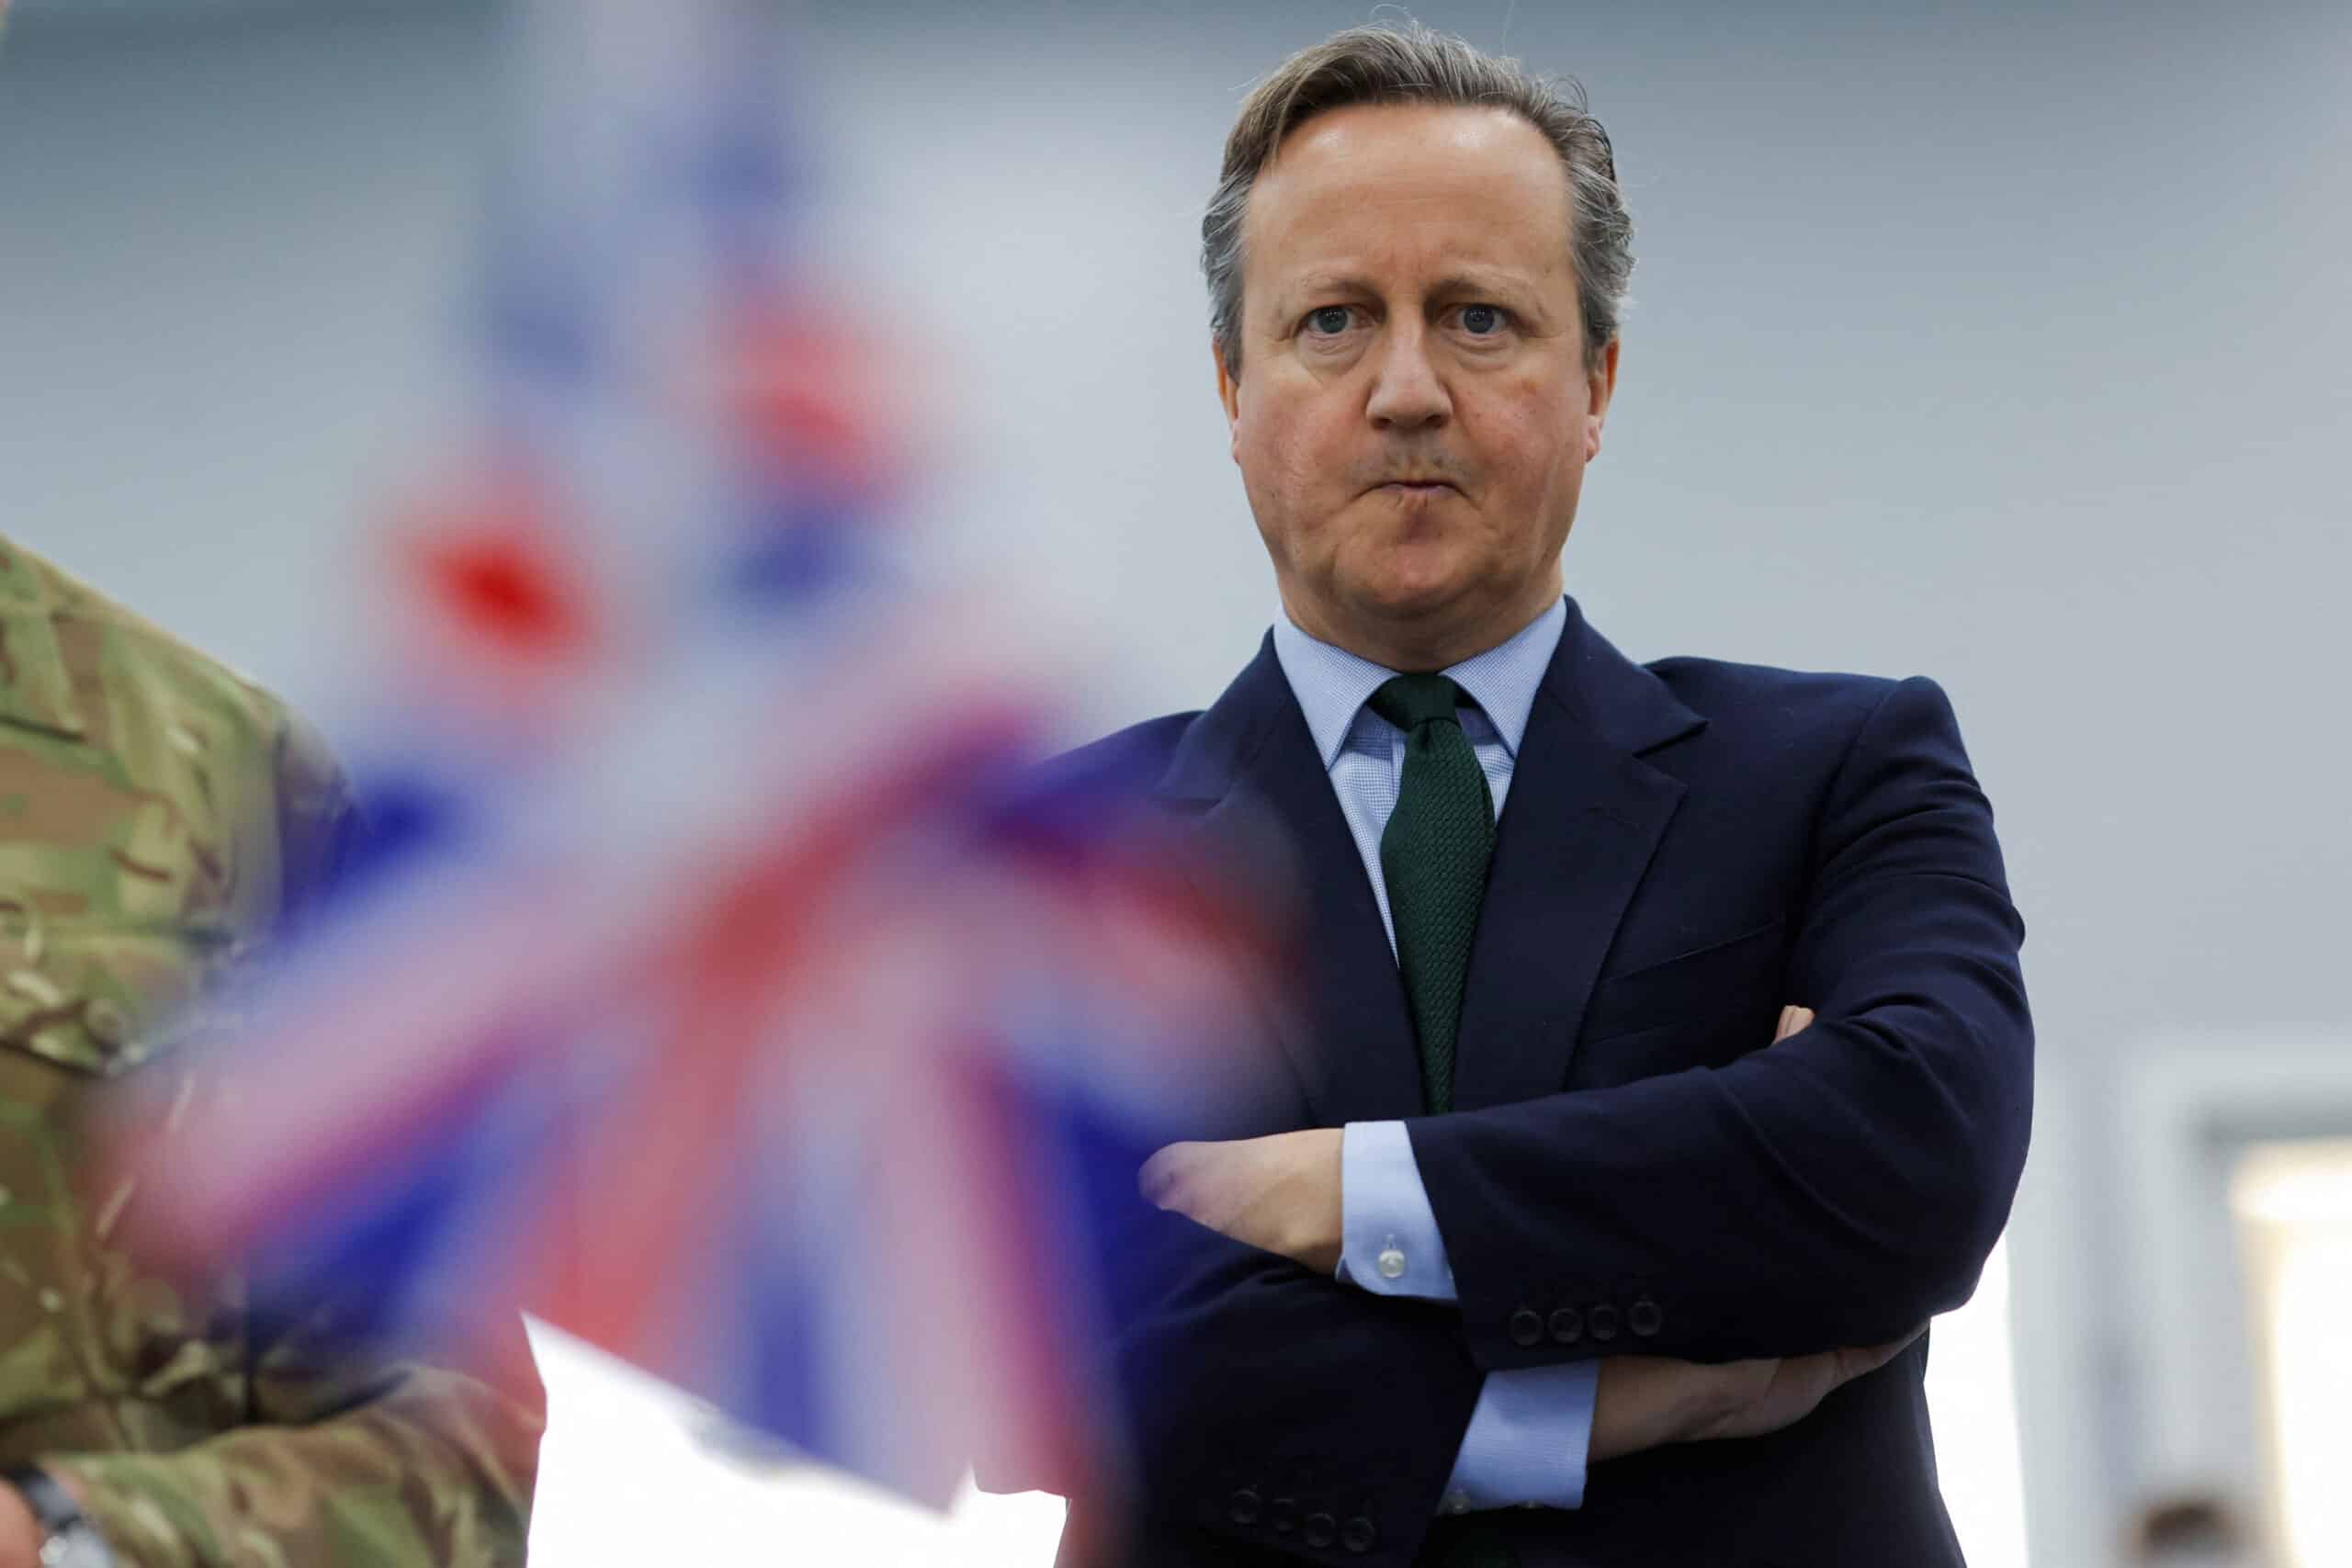 Cameron tells Netanyahu of two-state need, warning of ‘unimaginable’ suffering